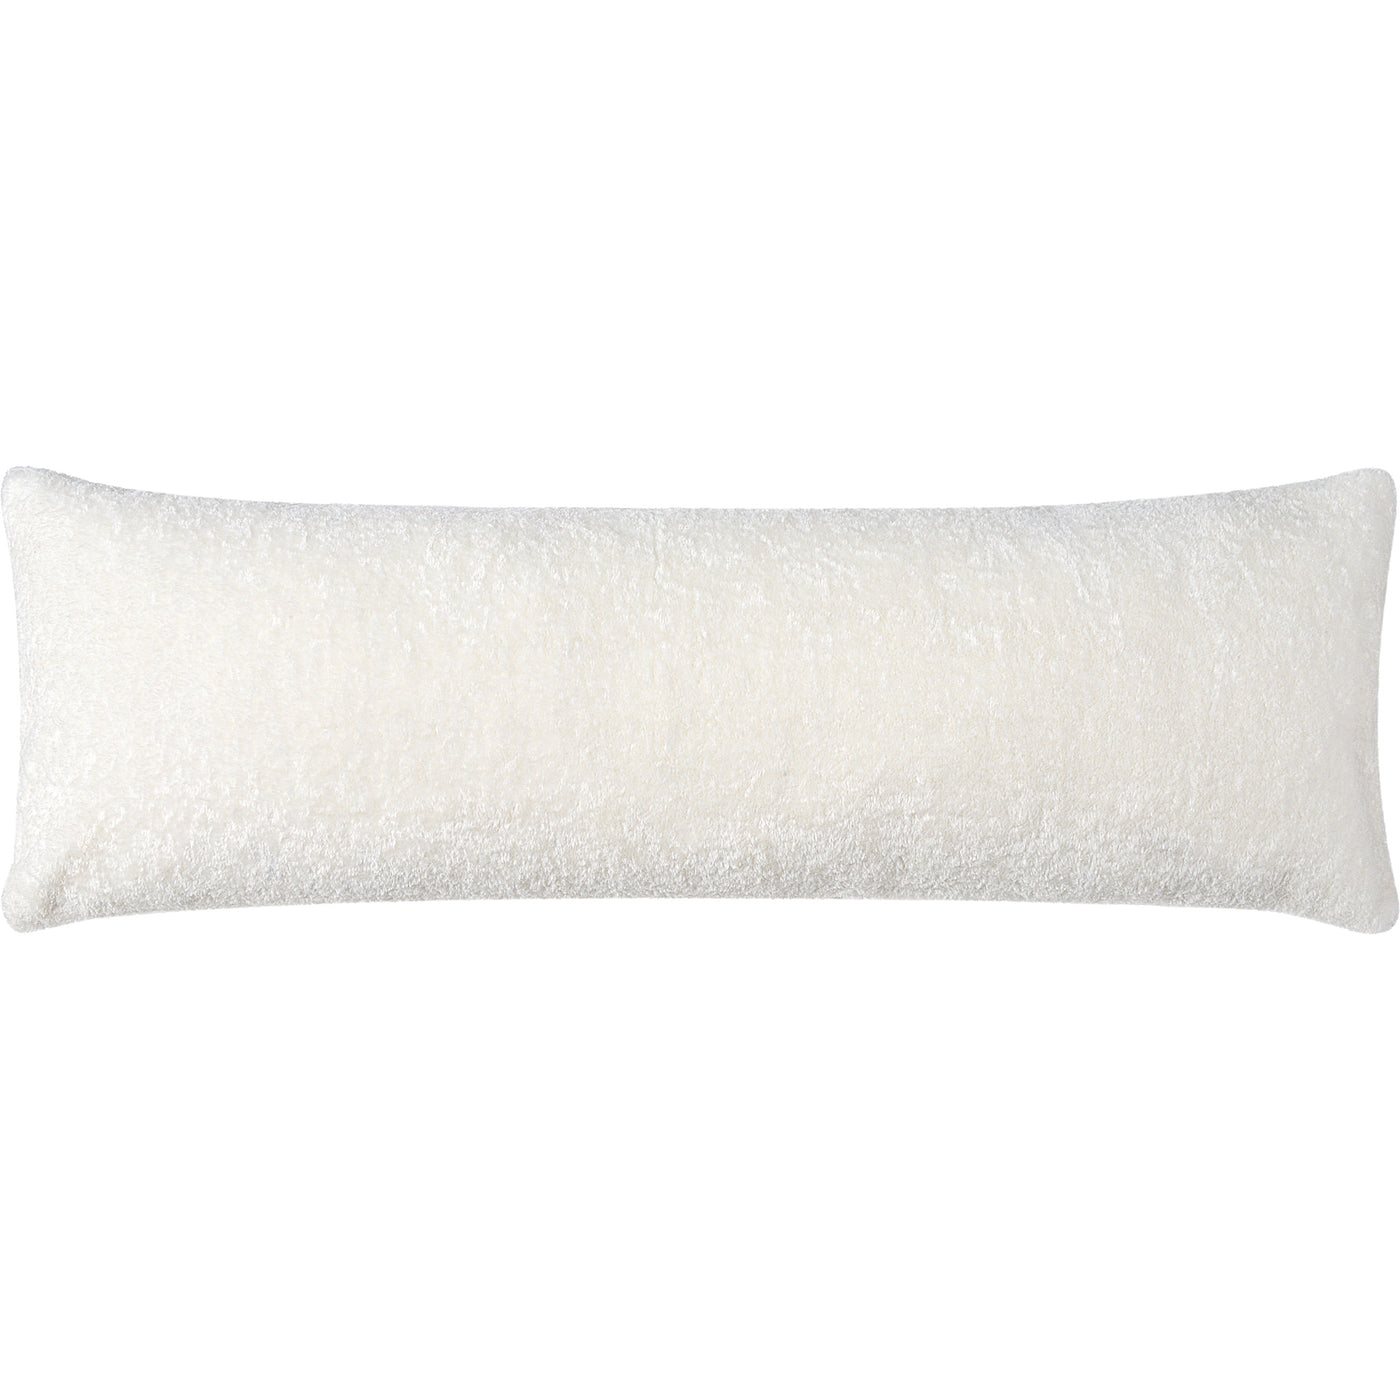 Abbie Kidney Pillow (Lux size)